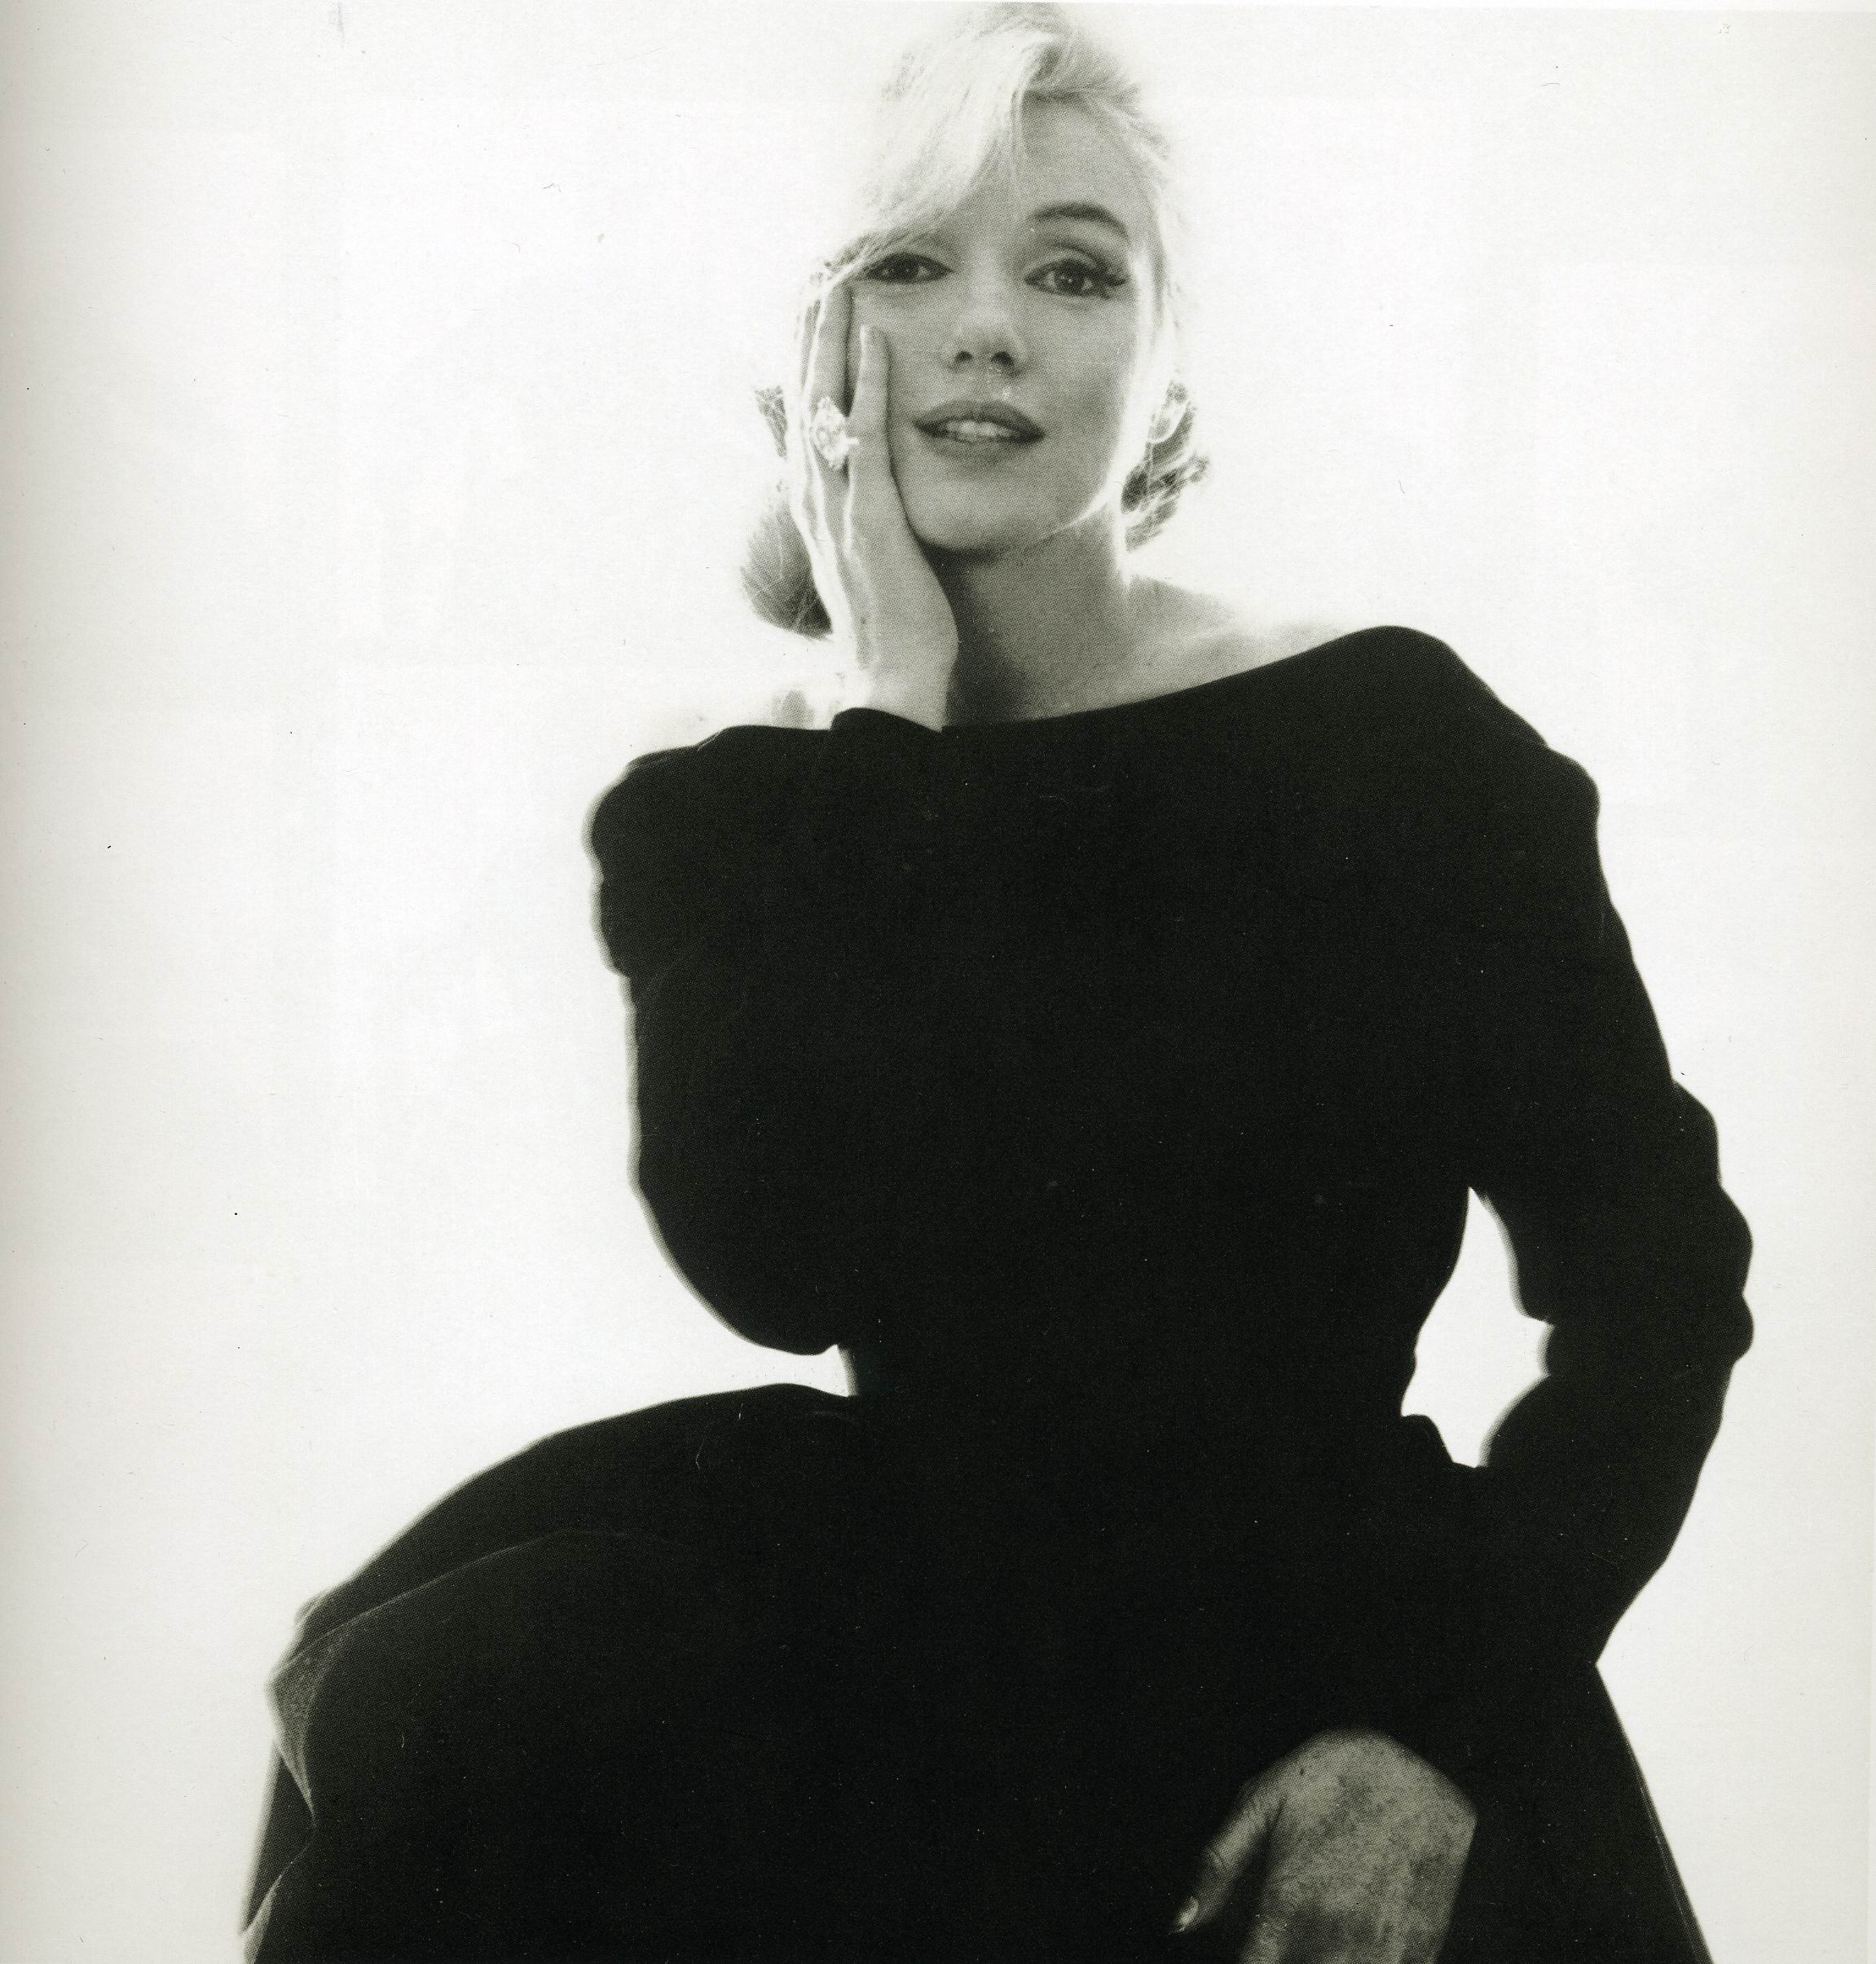 Marilyn Monroe photo 1056 of 2137 pics, wallpaper - photo #314861 ...